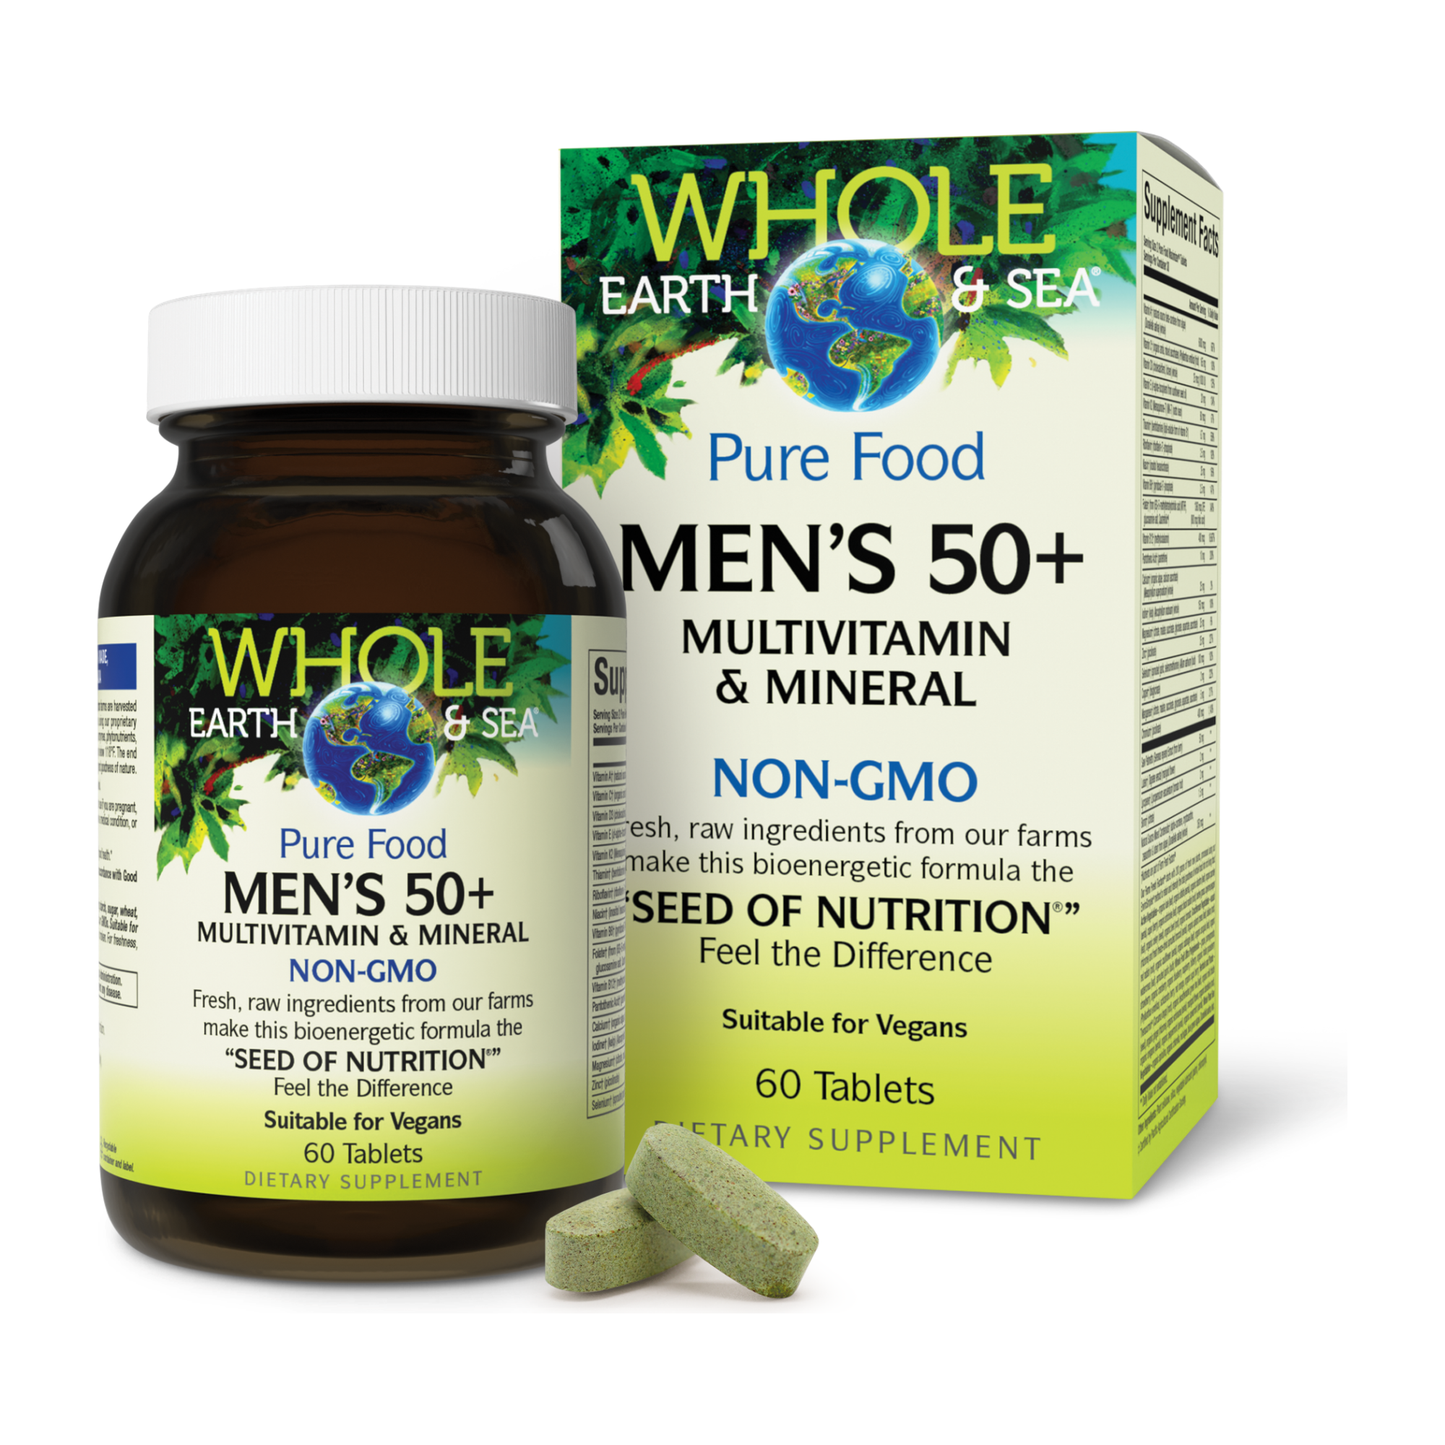 Men's 50+ Multivitamin & Mineral for Whole Earth & Sea® |variant|hi-res|35503U